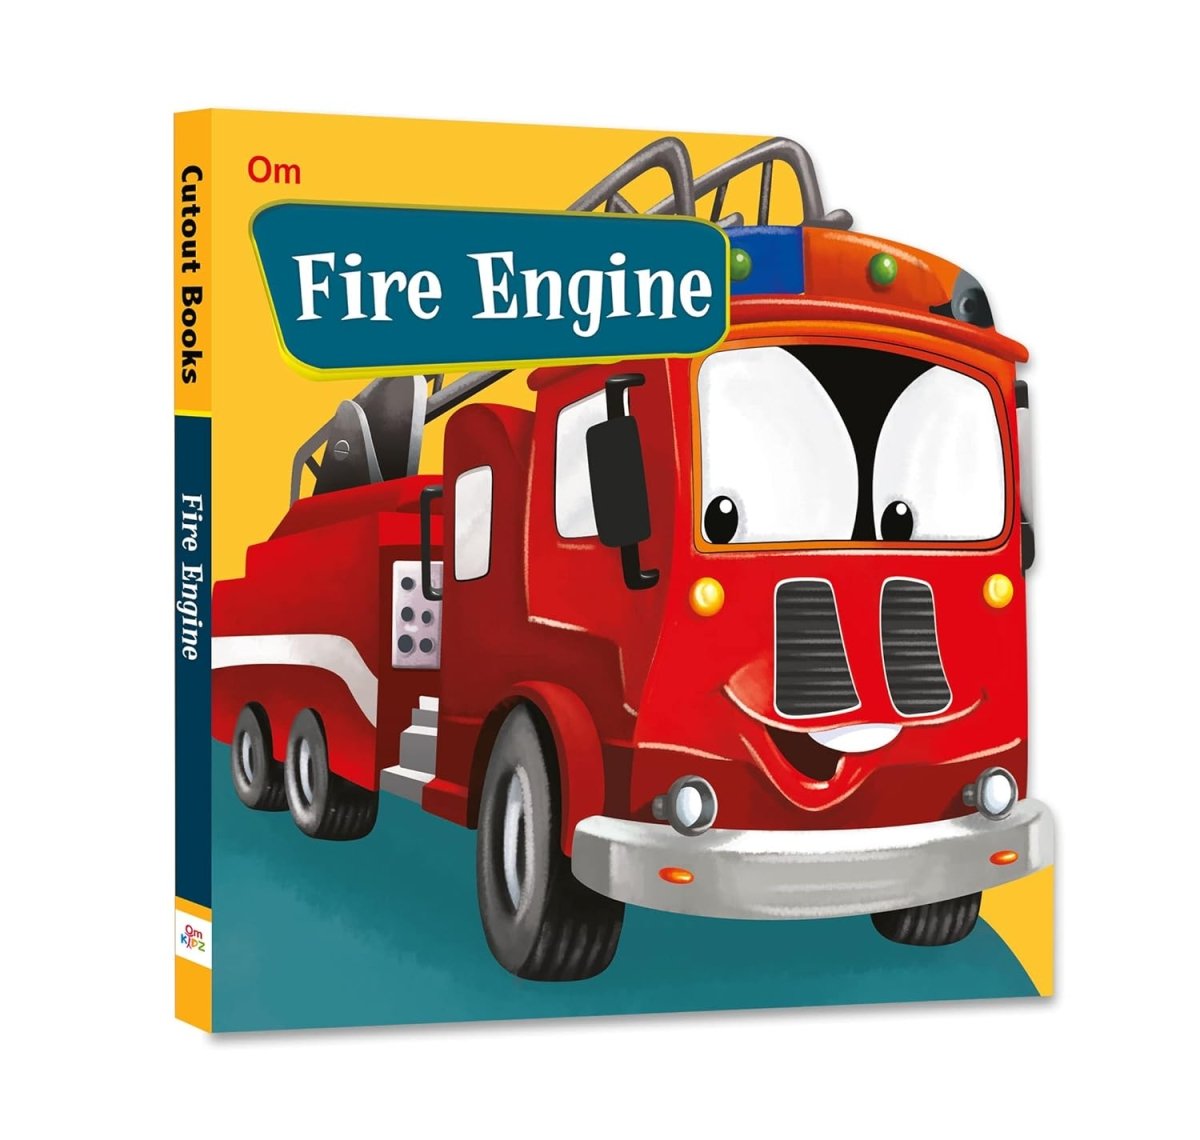 Om Books International Fire Engine ( Transport )- Cutout Board Books - 9789385252037